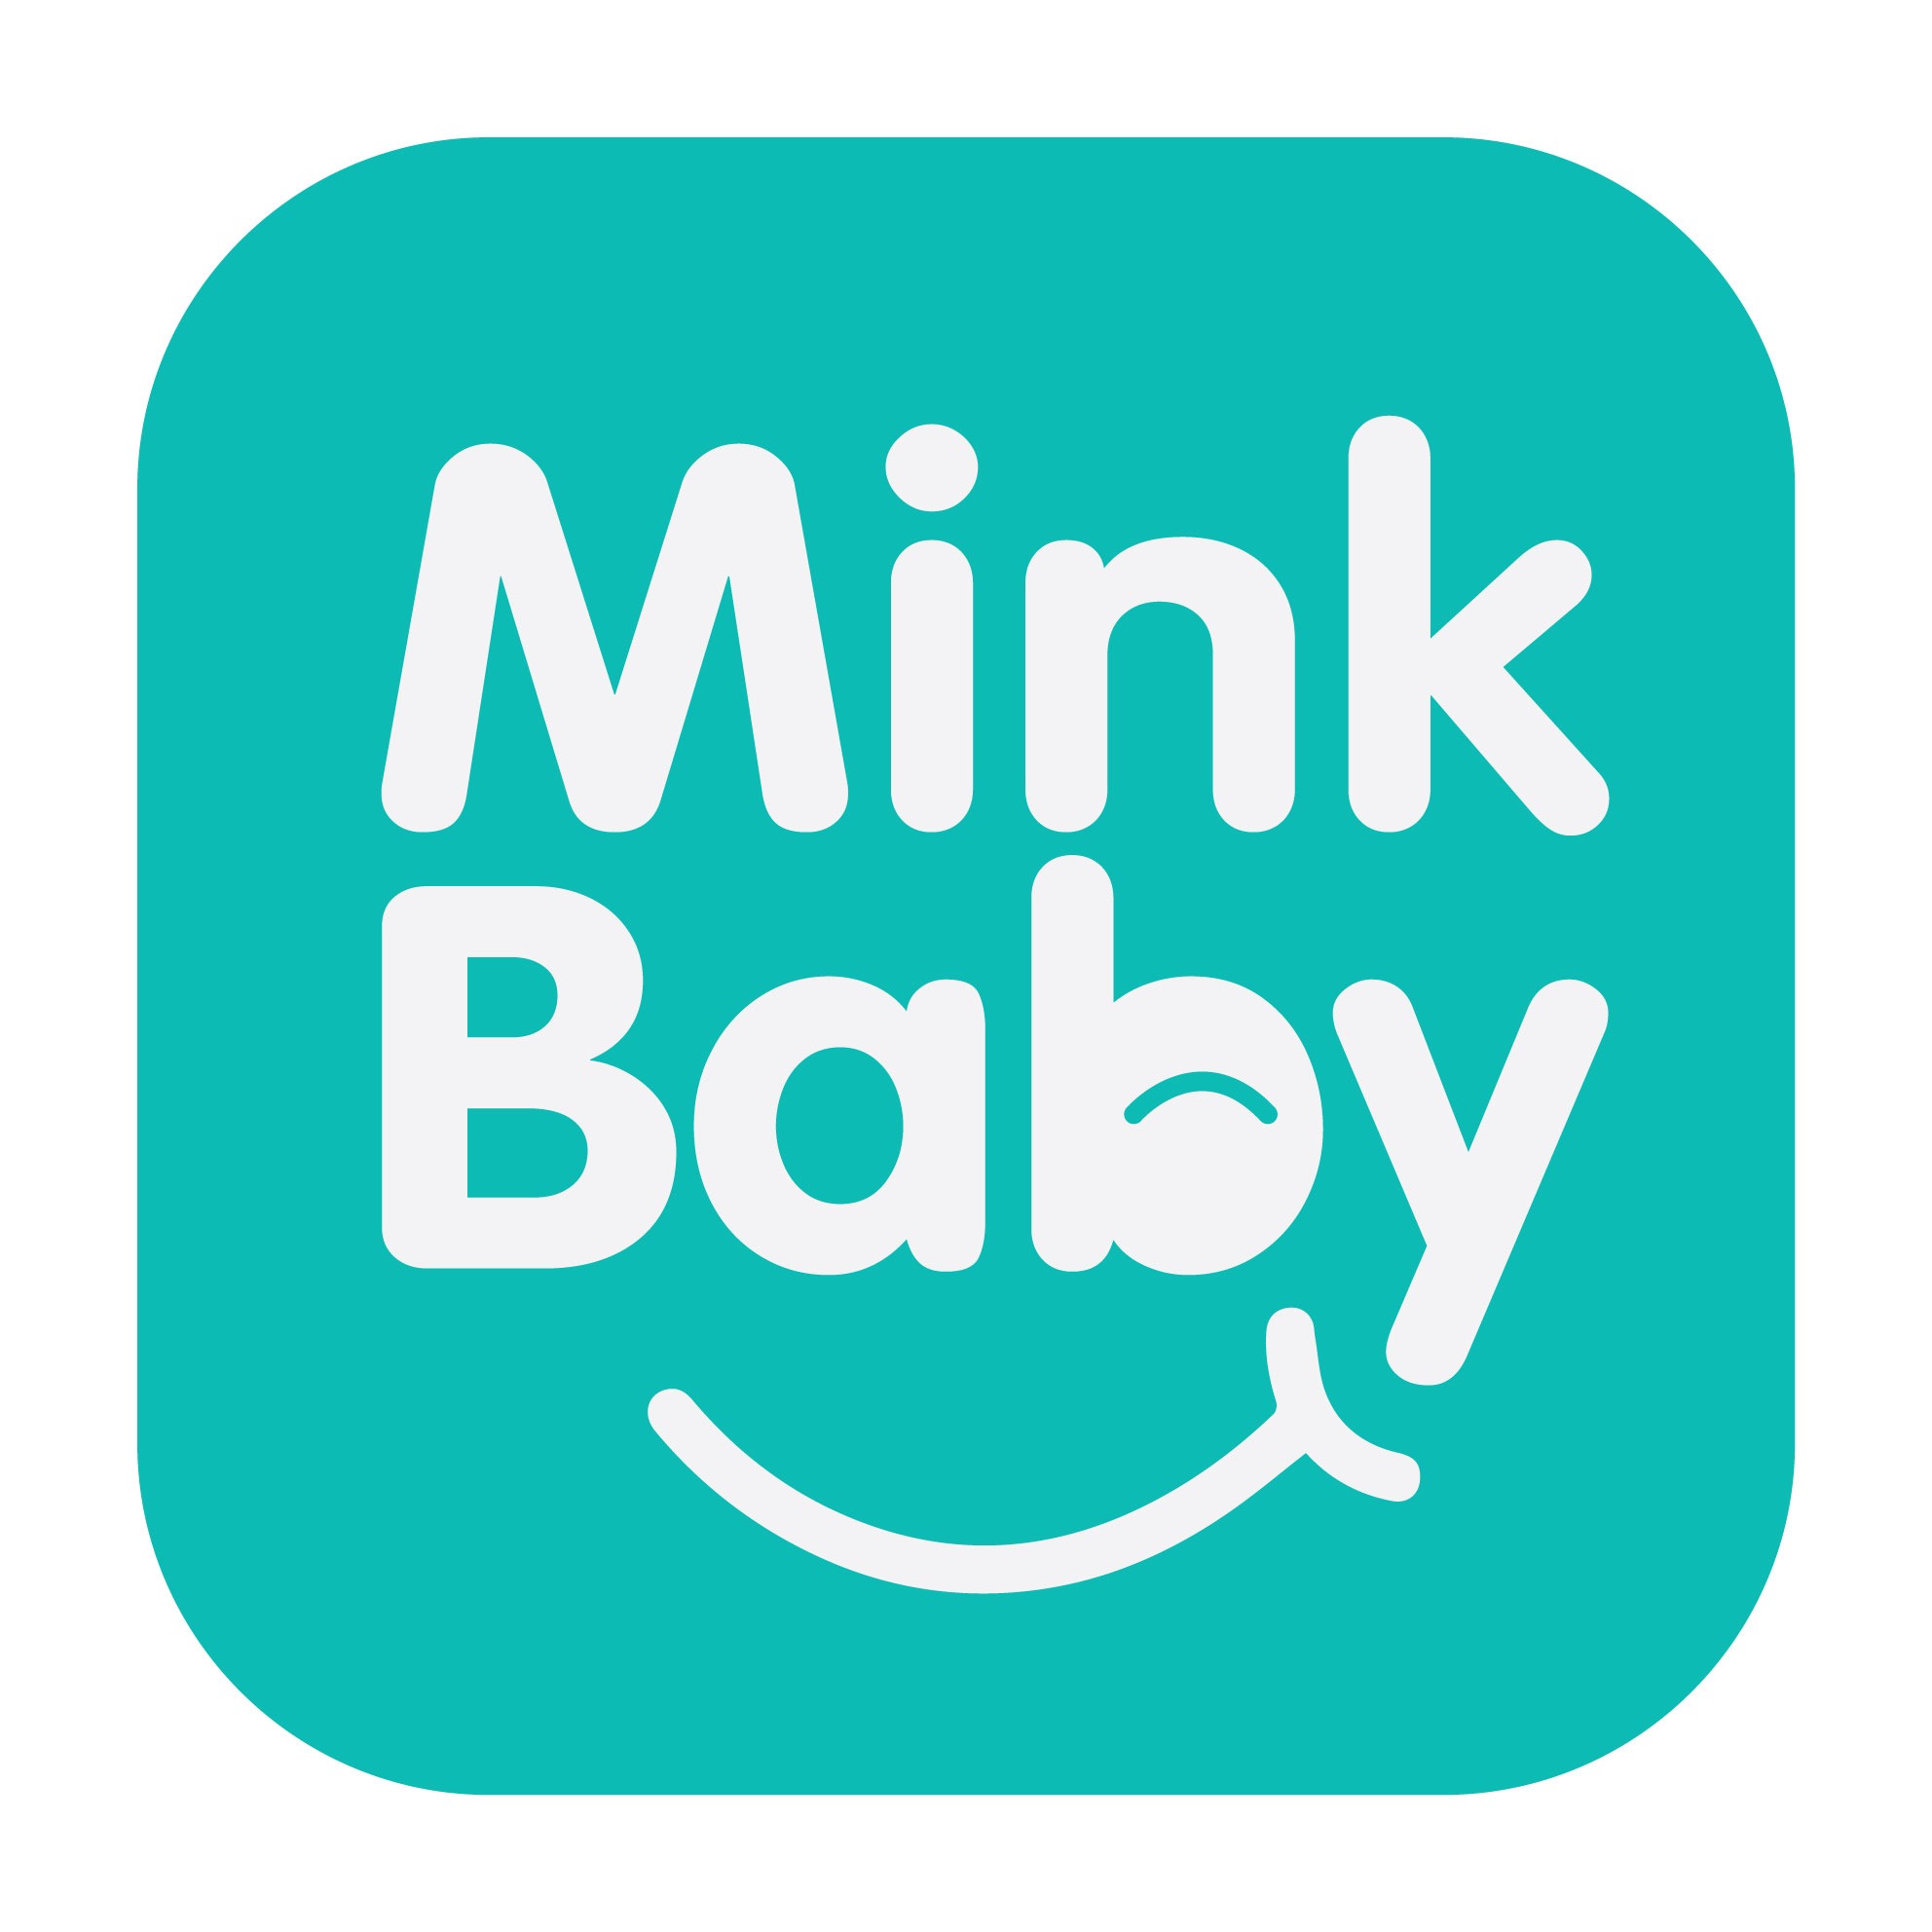 Mink baby ( Địu em bé)